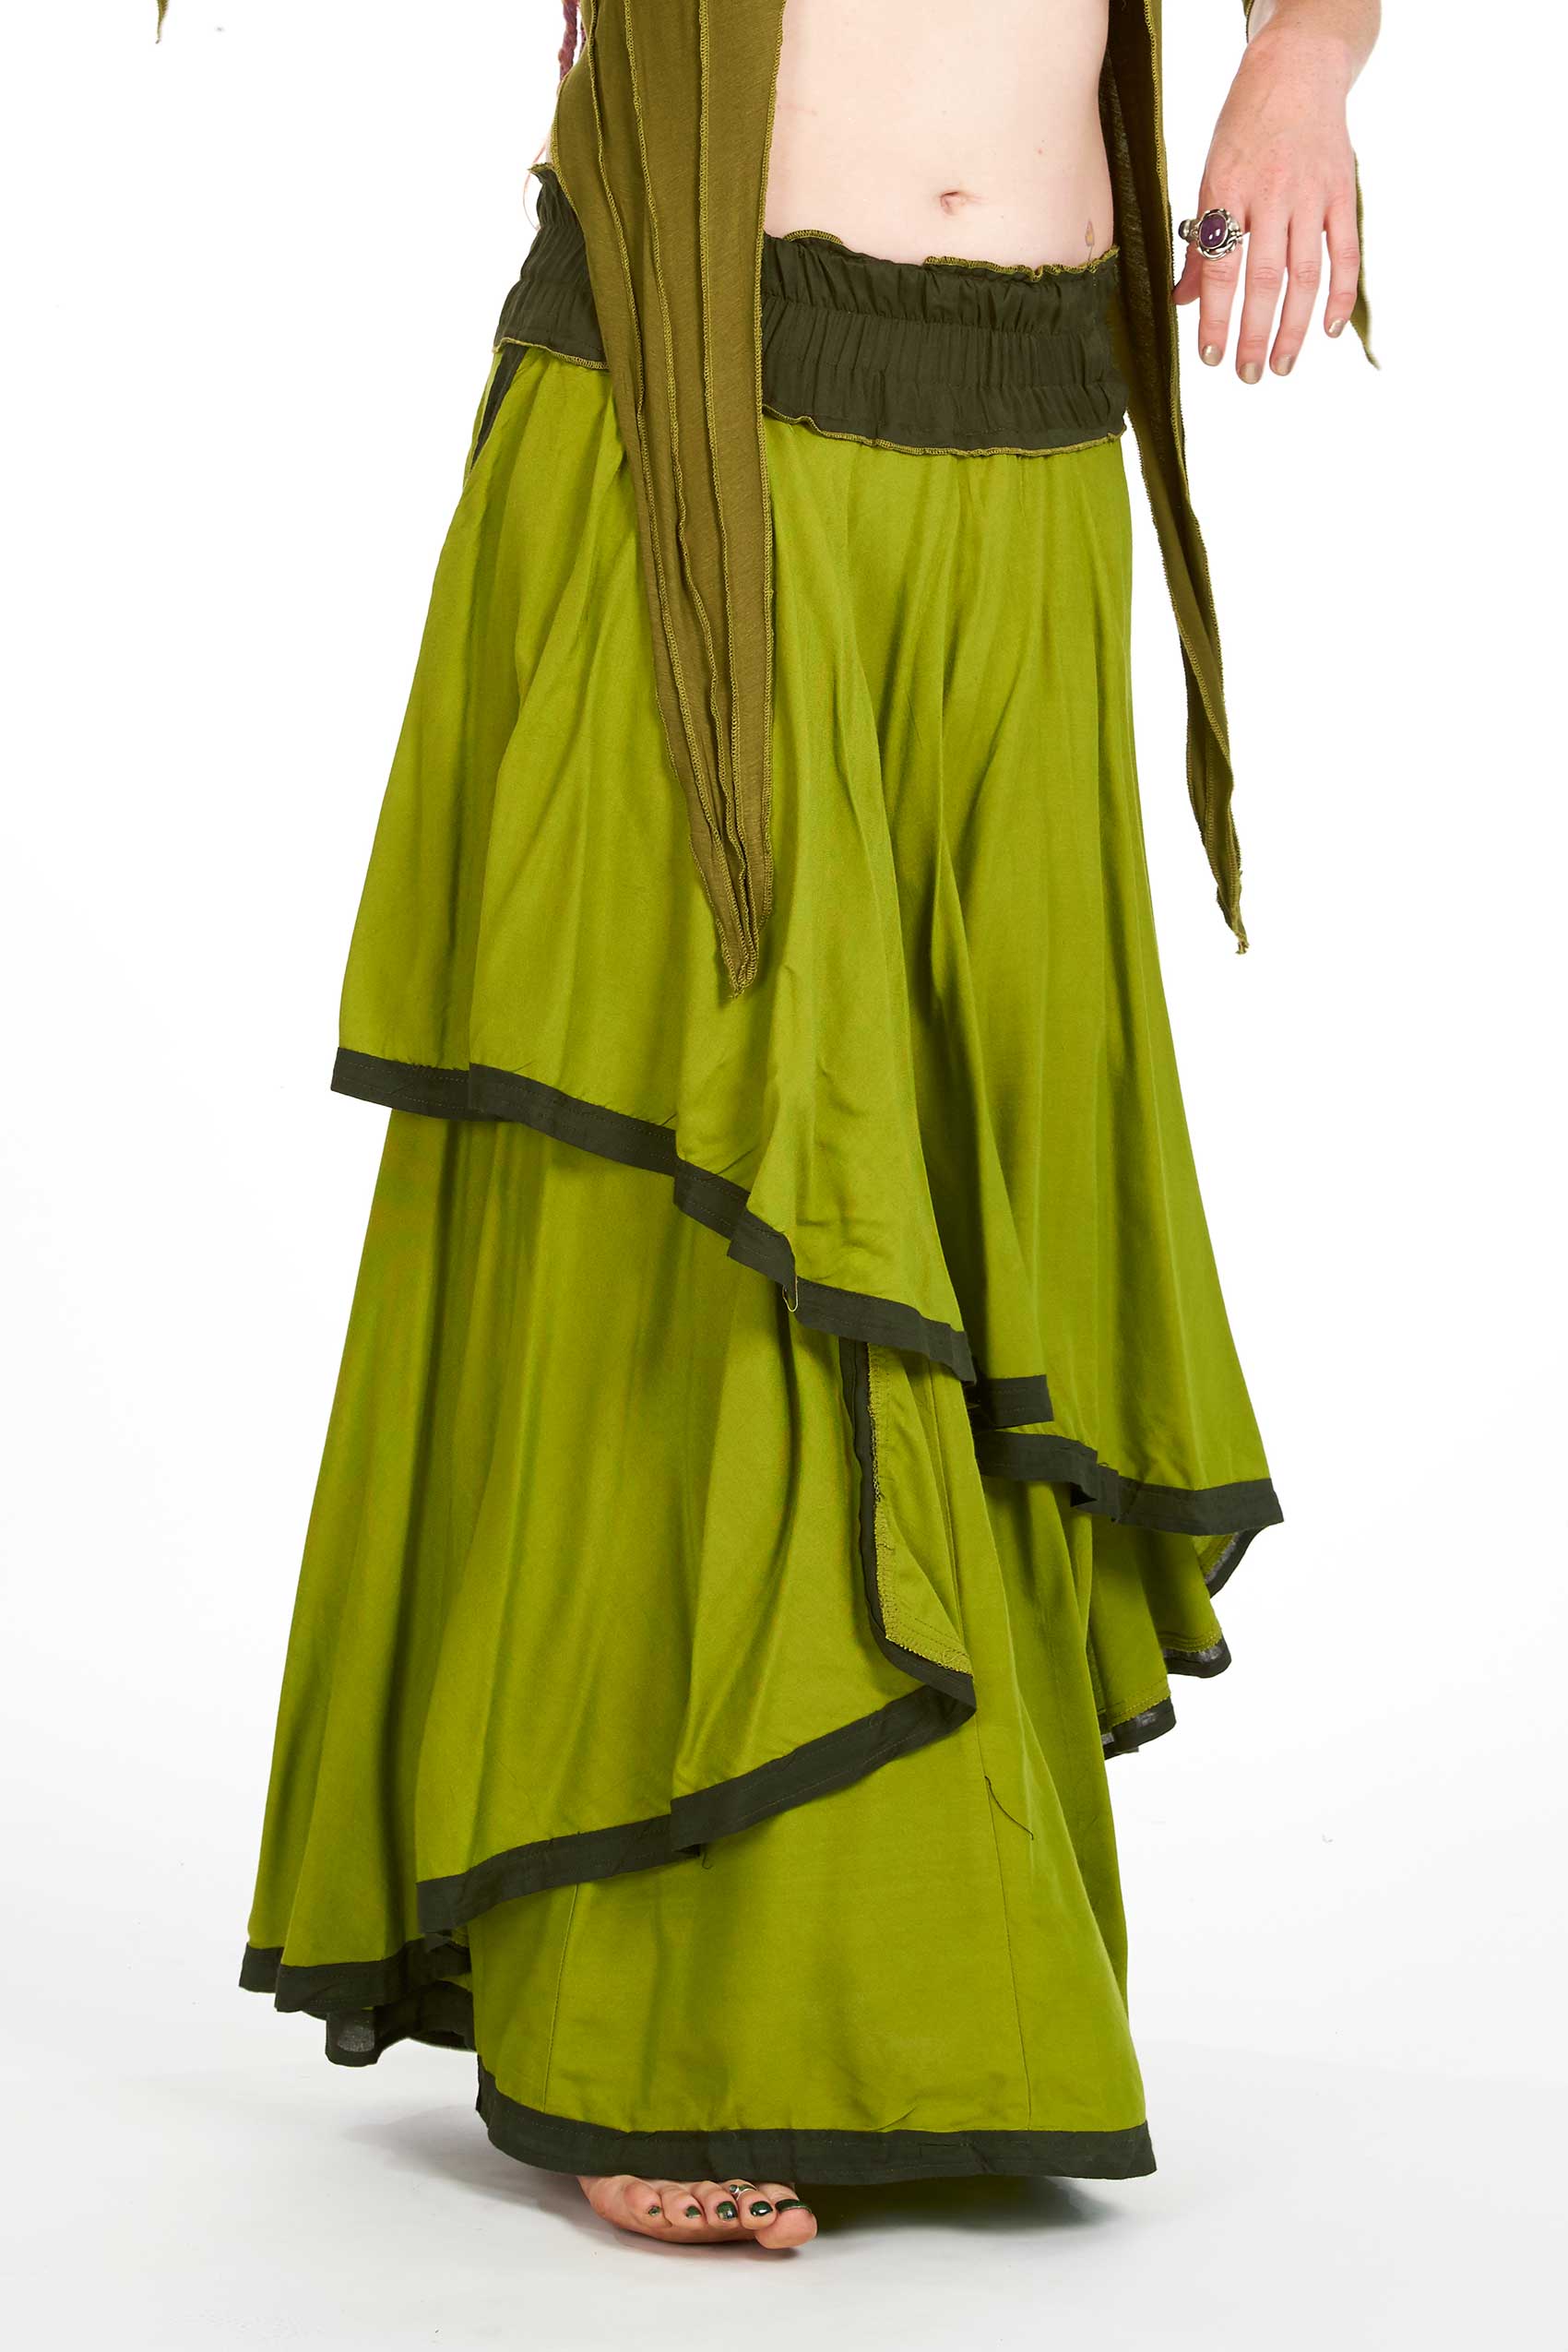 Hippy Flow Skirt, long boho skirt, bohemian gypsy skirt | Altshop UK